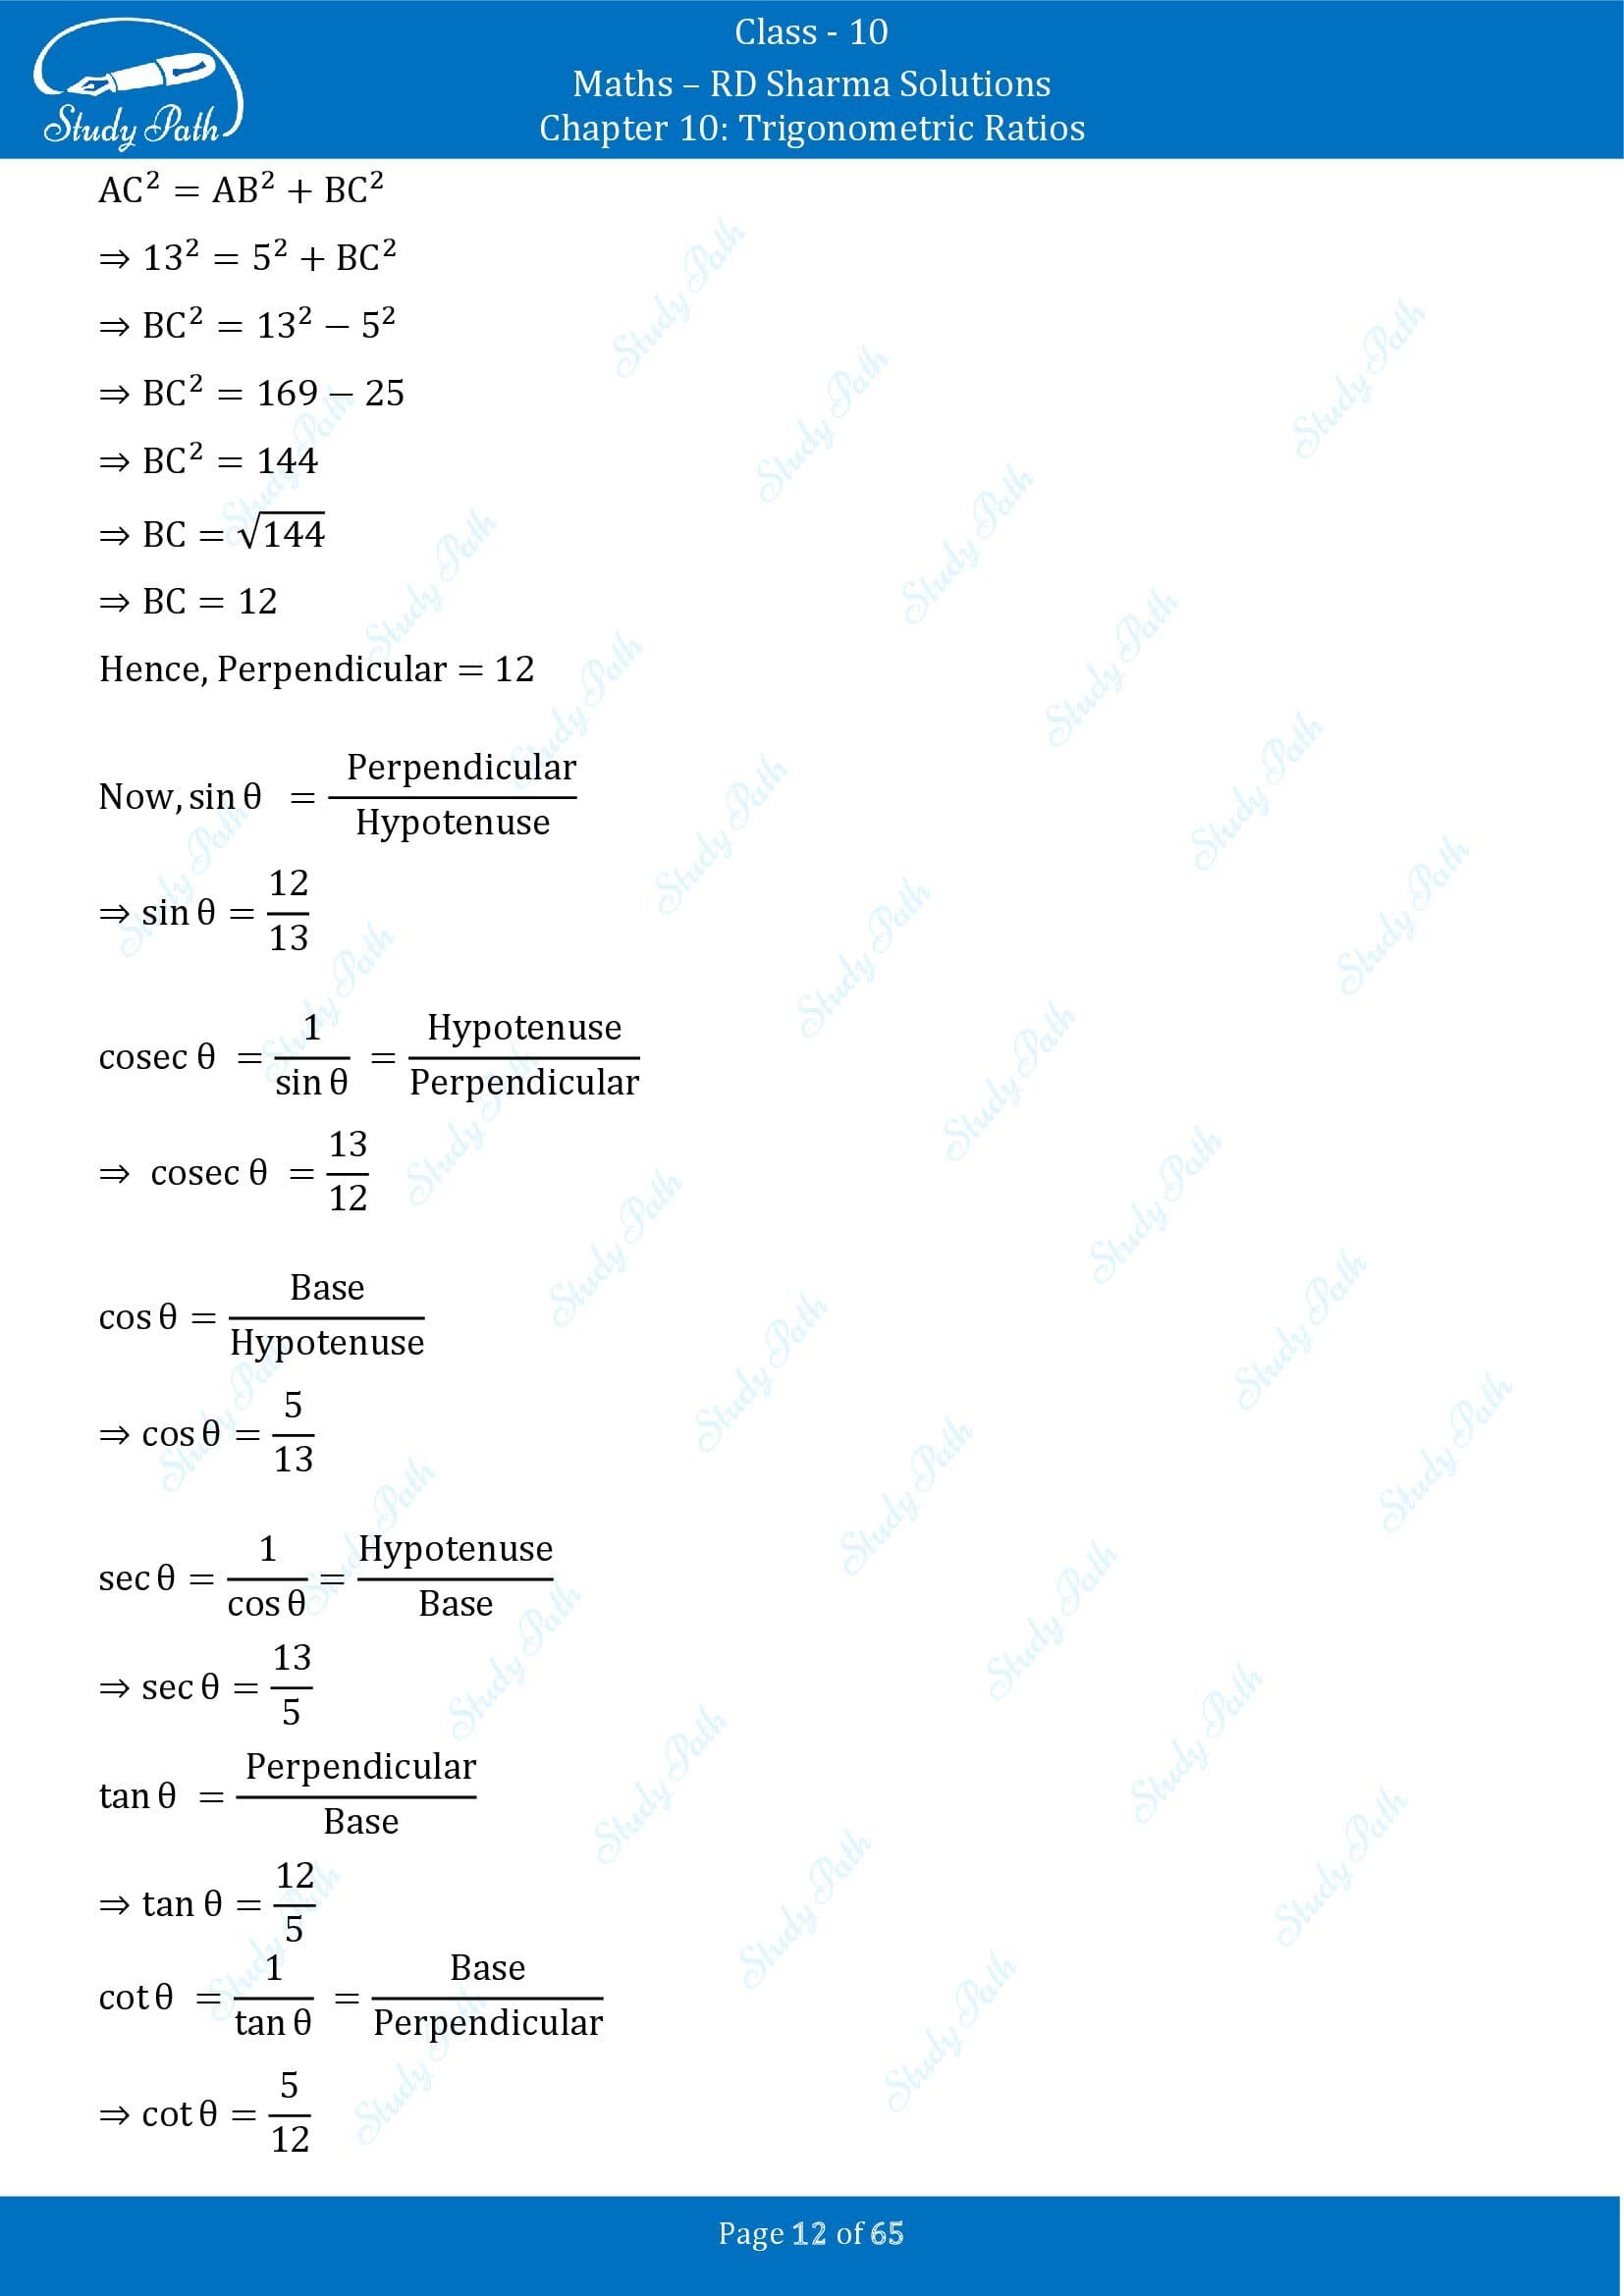 RD Sharma Solutions Class 10 Chapter 10 Trigonometric Ratios Exercise 10.1 00012